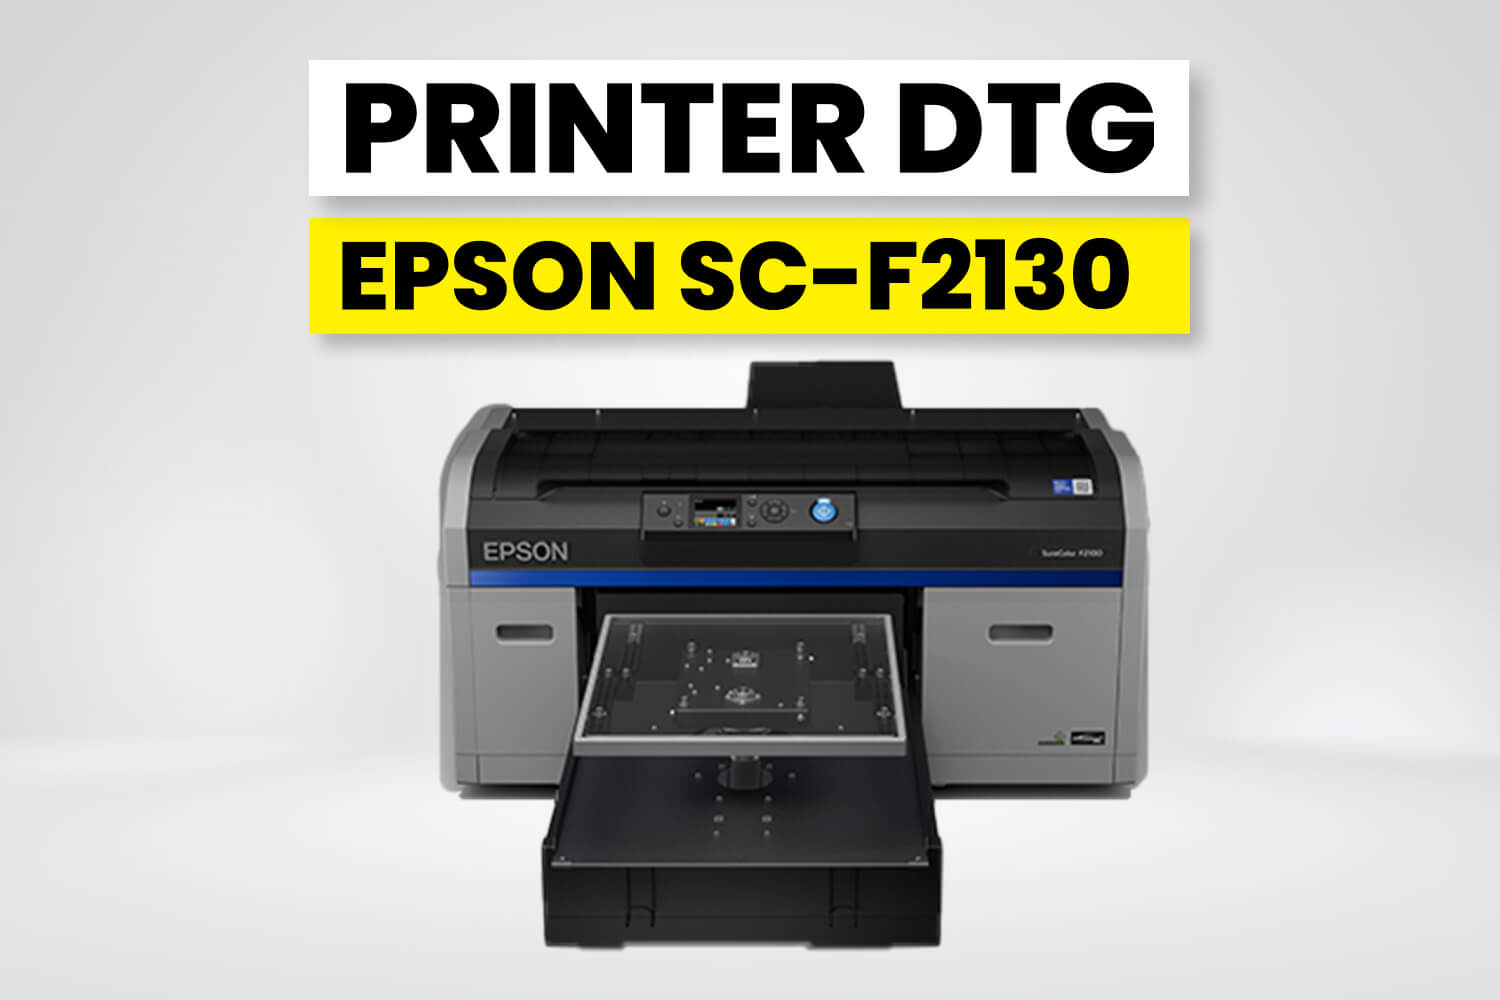 Printer Dtg Epson Surecolor Sc-F2130 Laysander